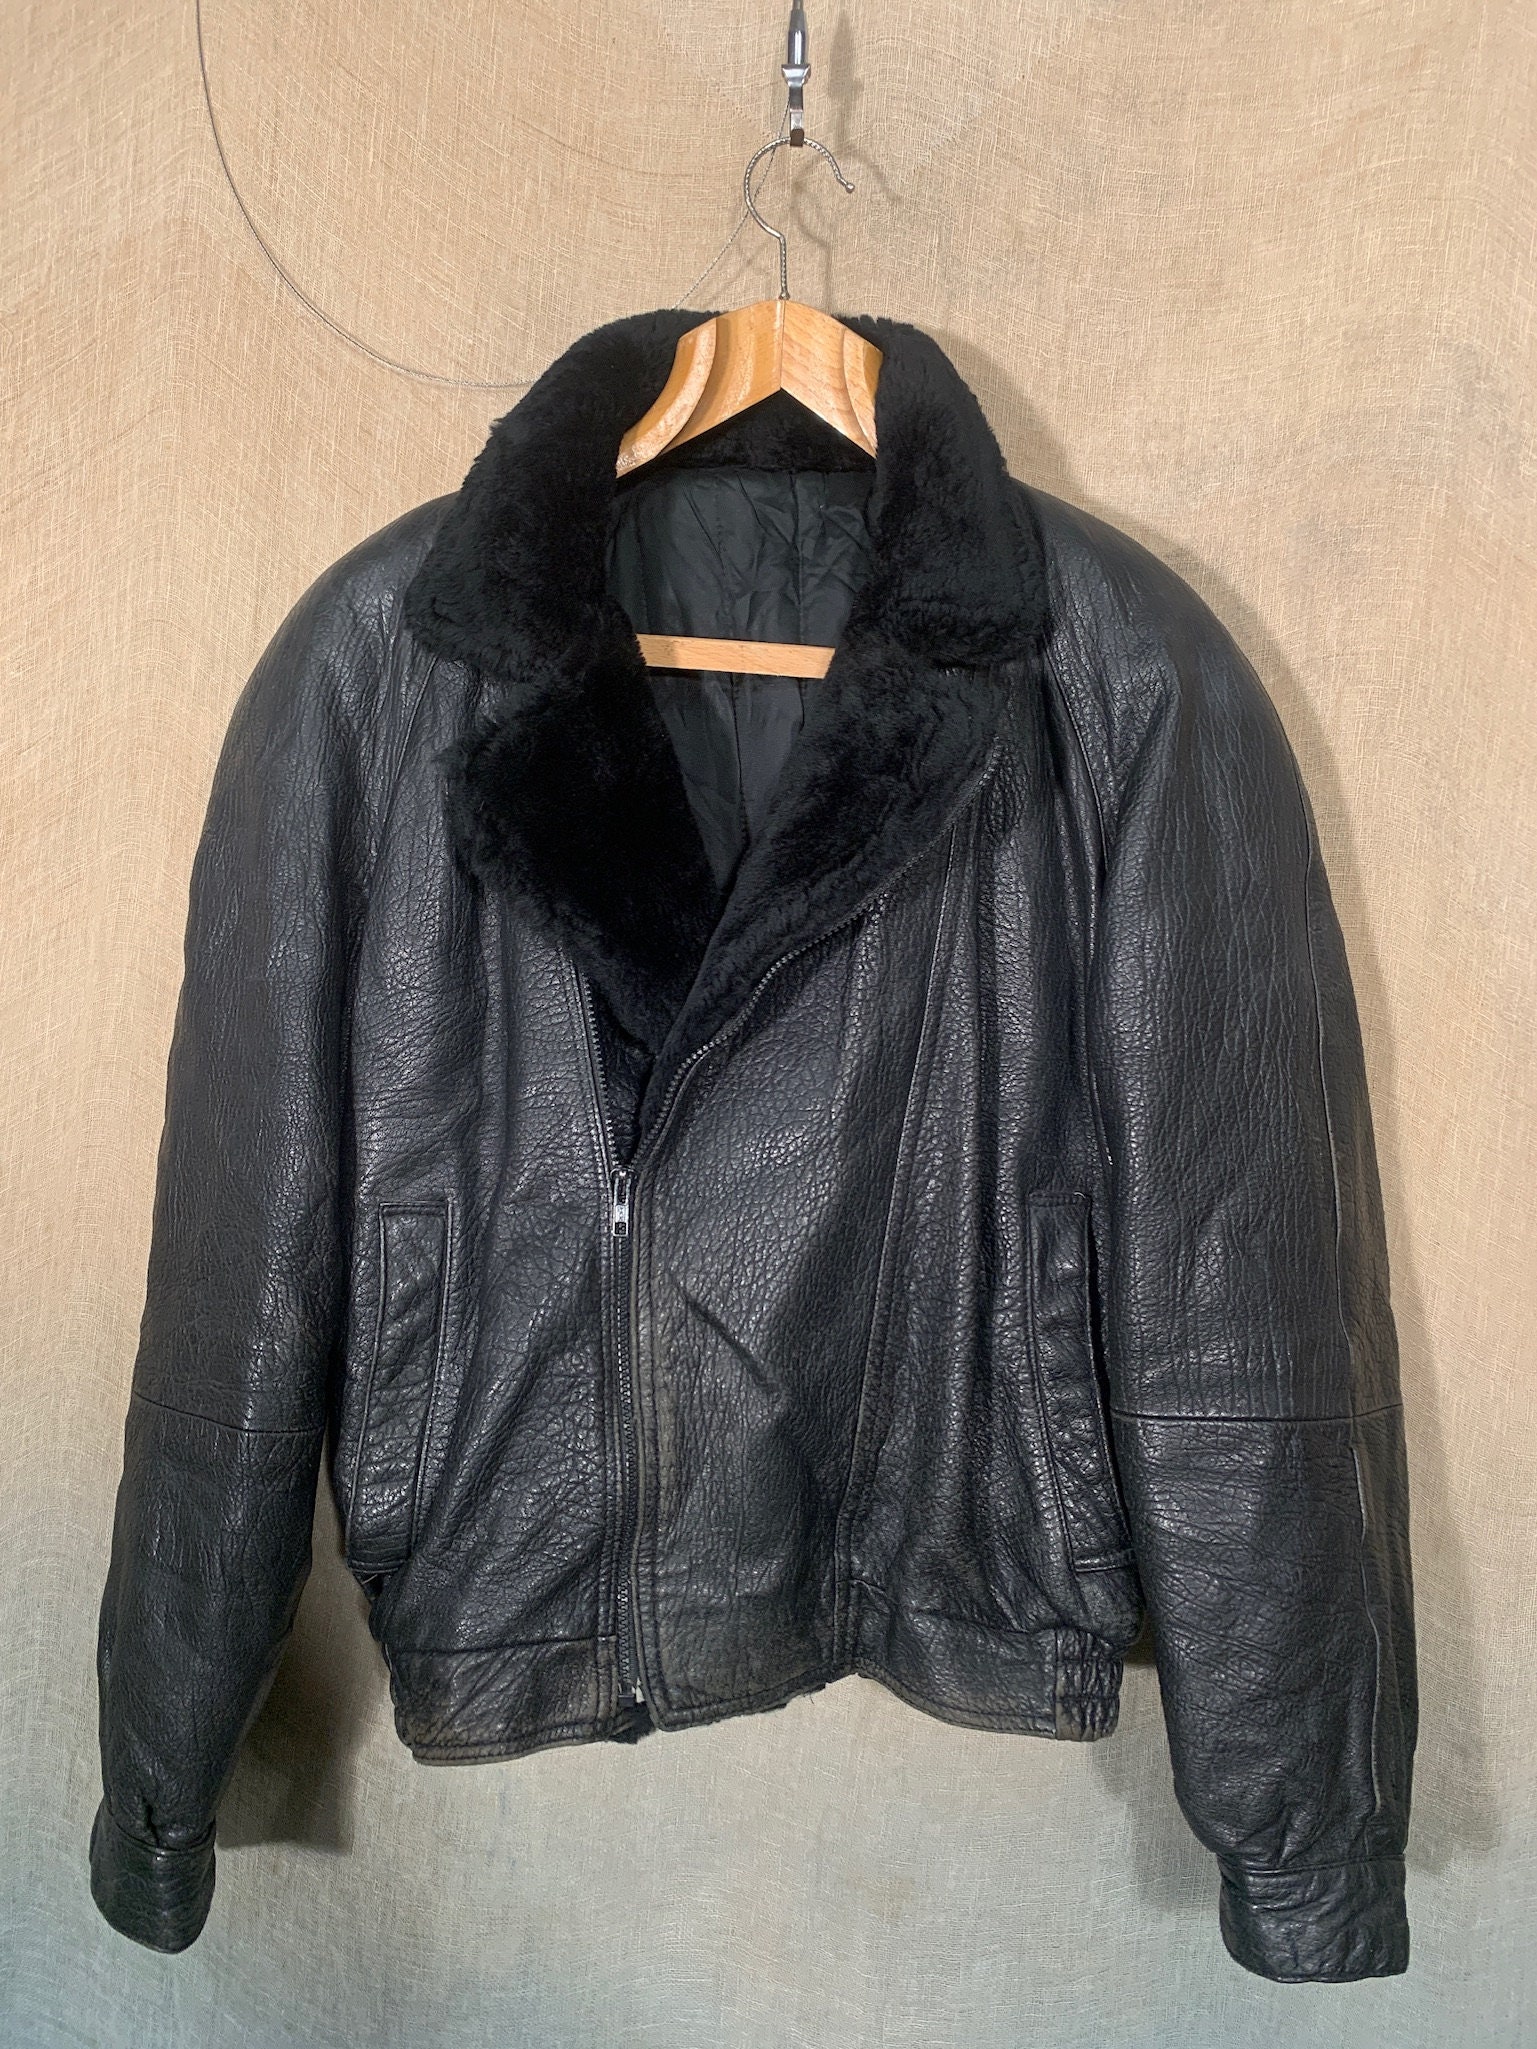 Unisex Vintage Italian Leather Bomber Jacket with Faux Fur | Etsy